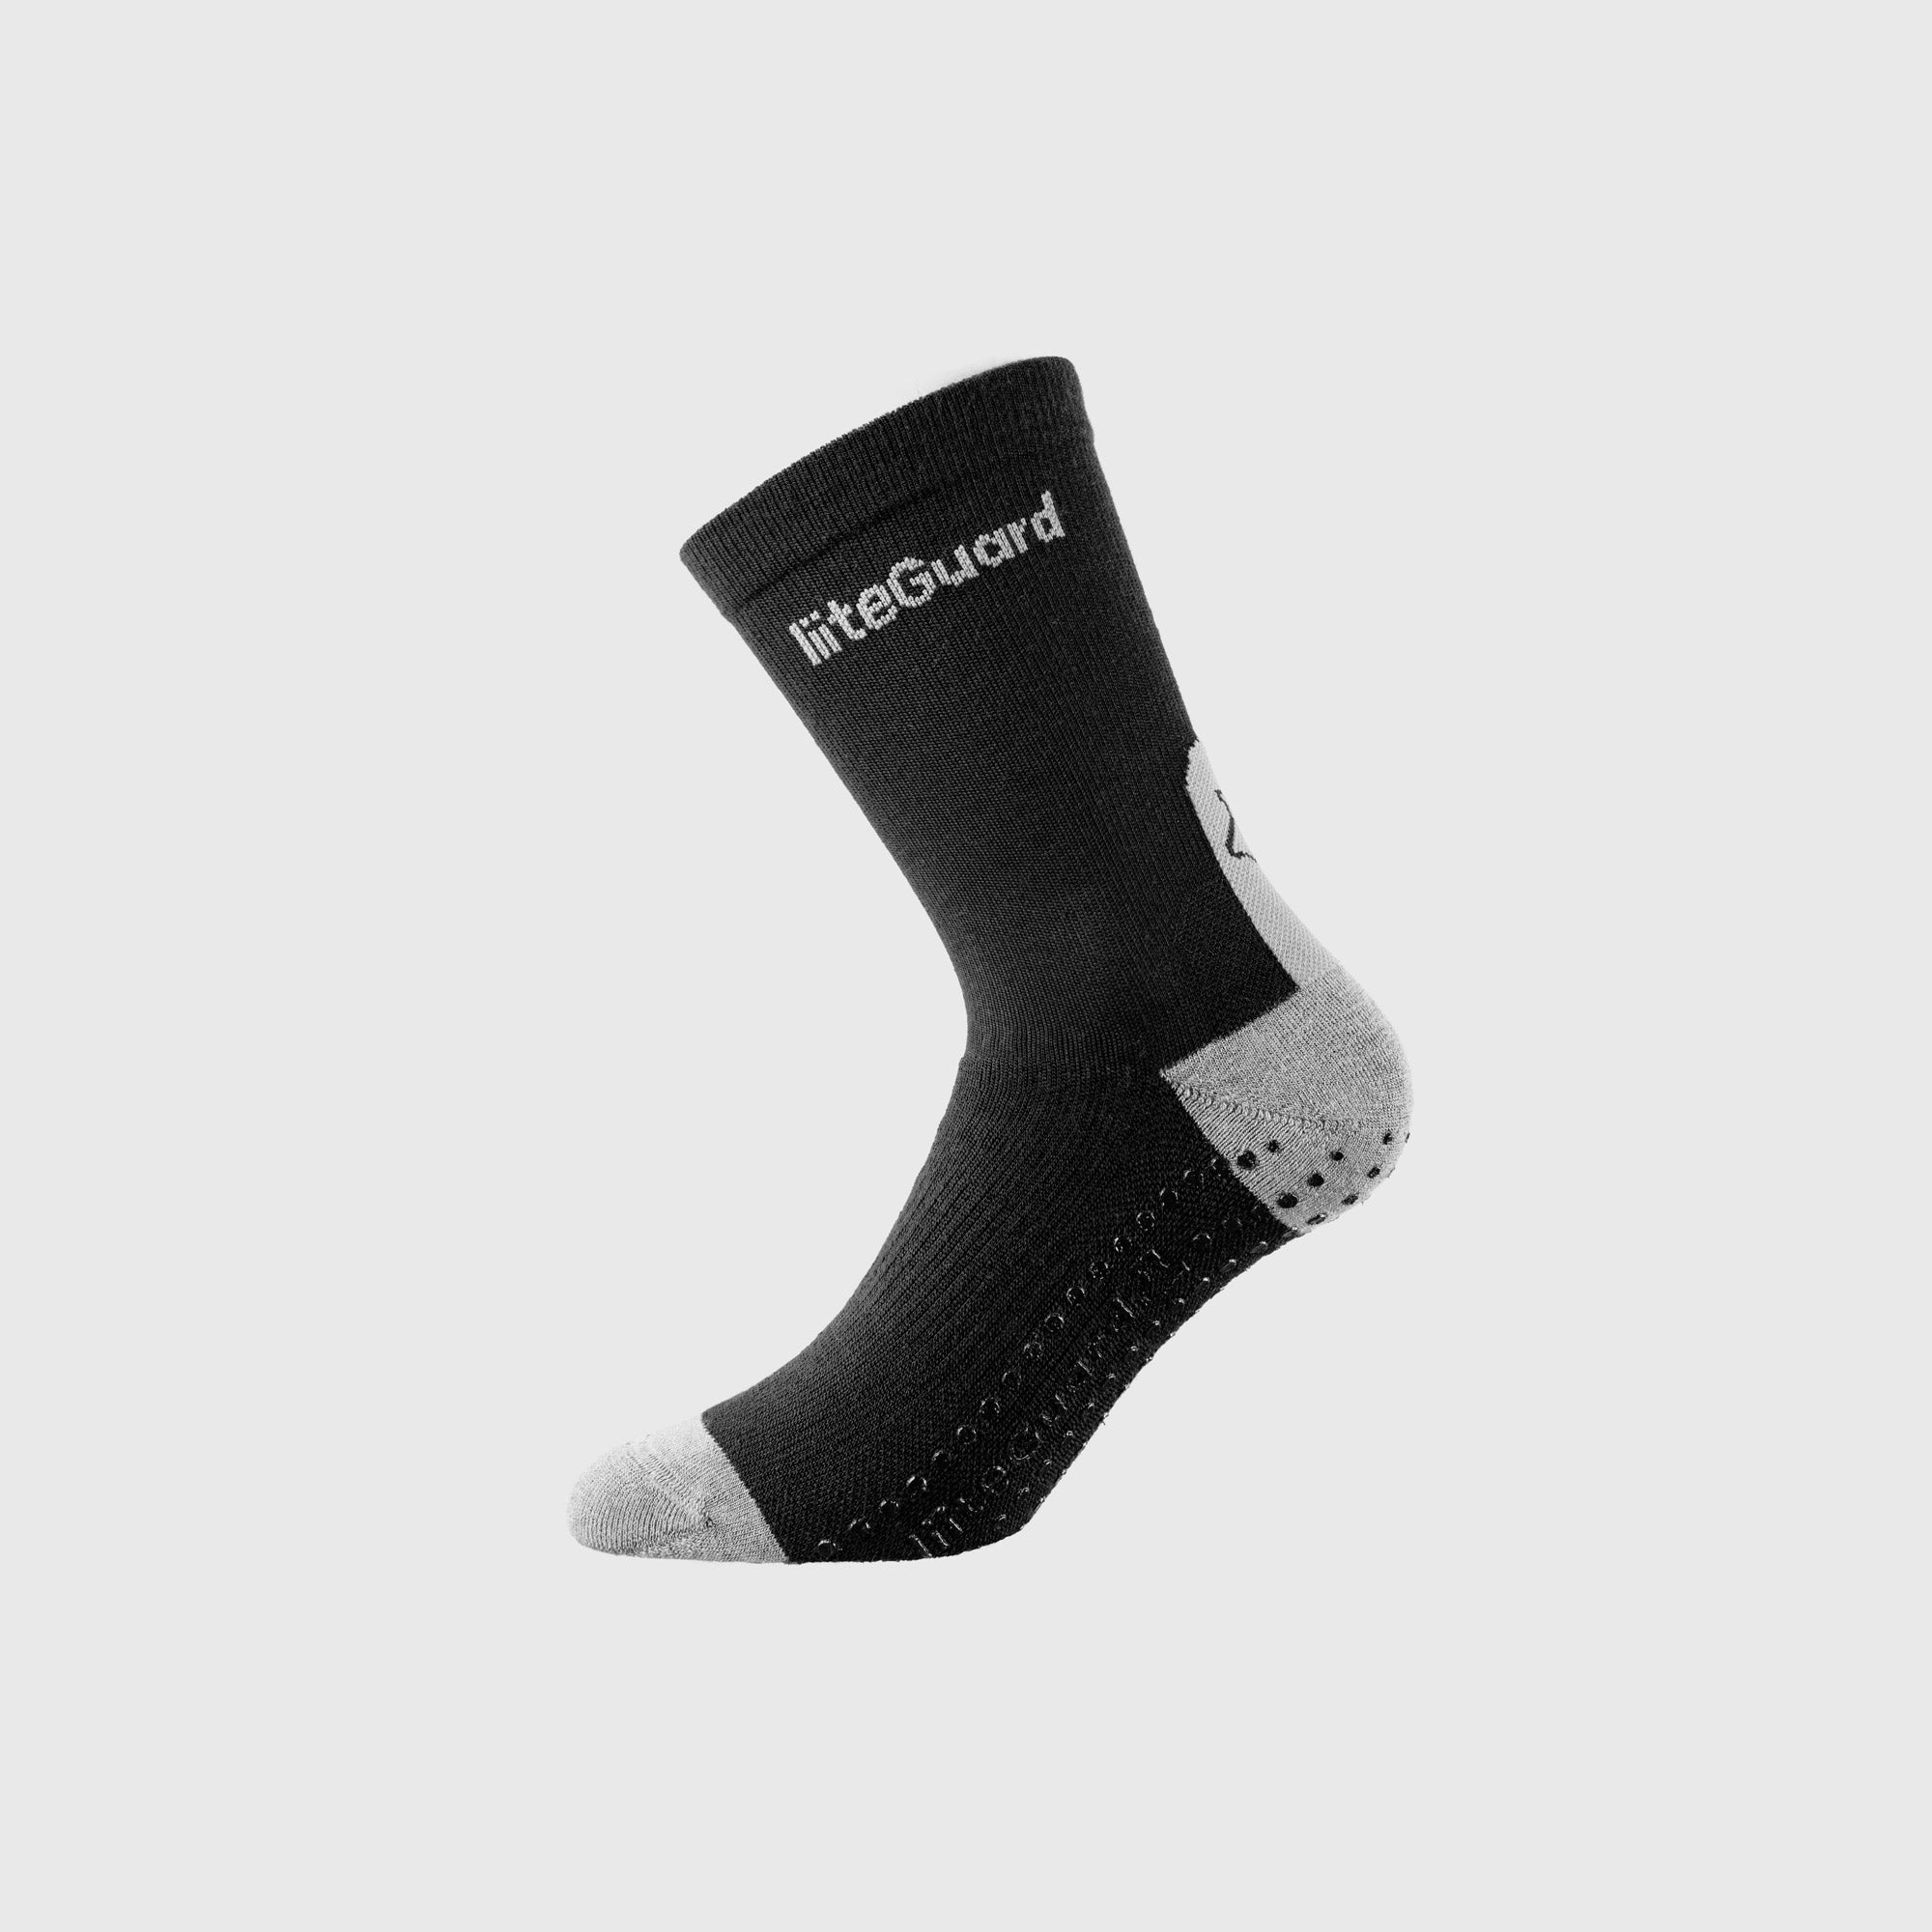 Liiteguard MERINO PRO-TECH Medium socks SCHWARZ